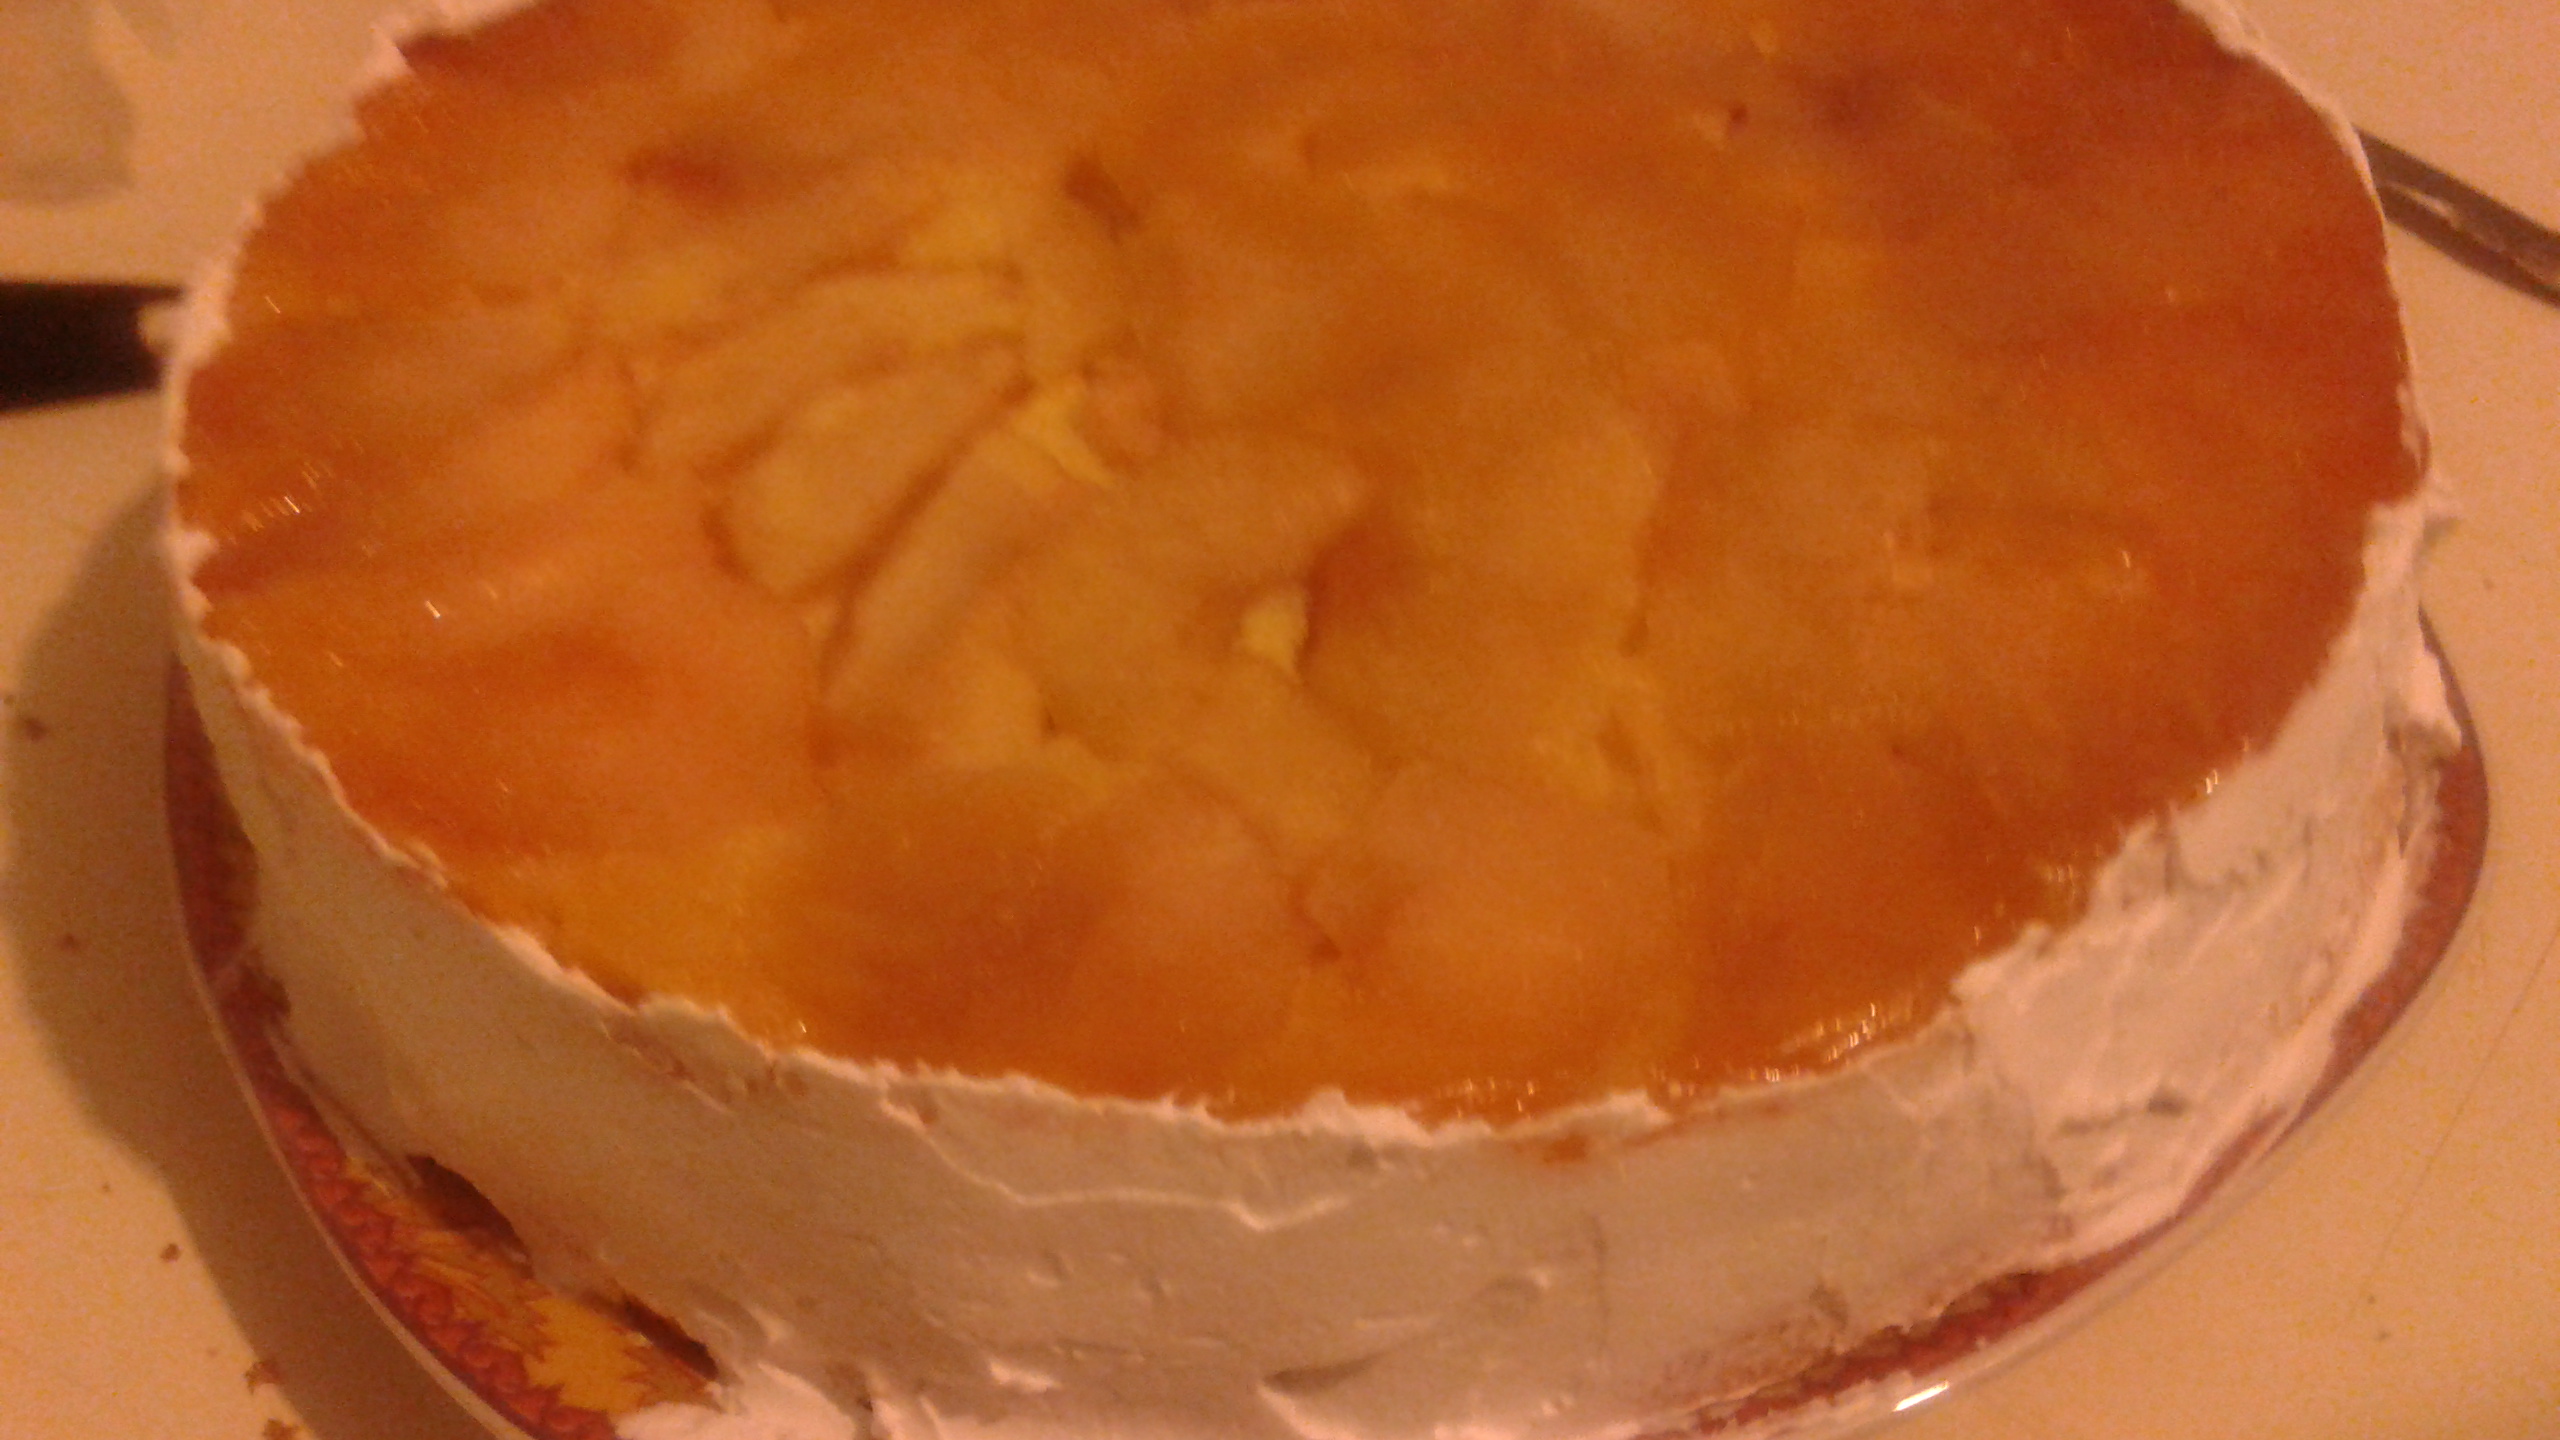 Tort din pandispan cu mere si crema caramel